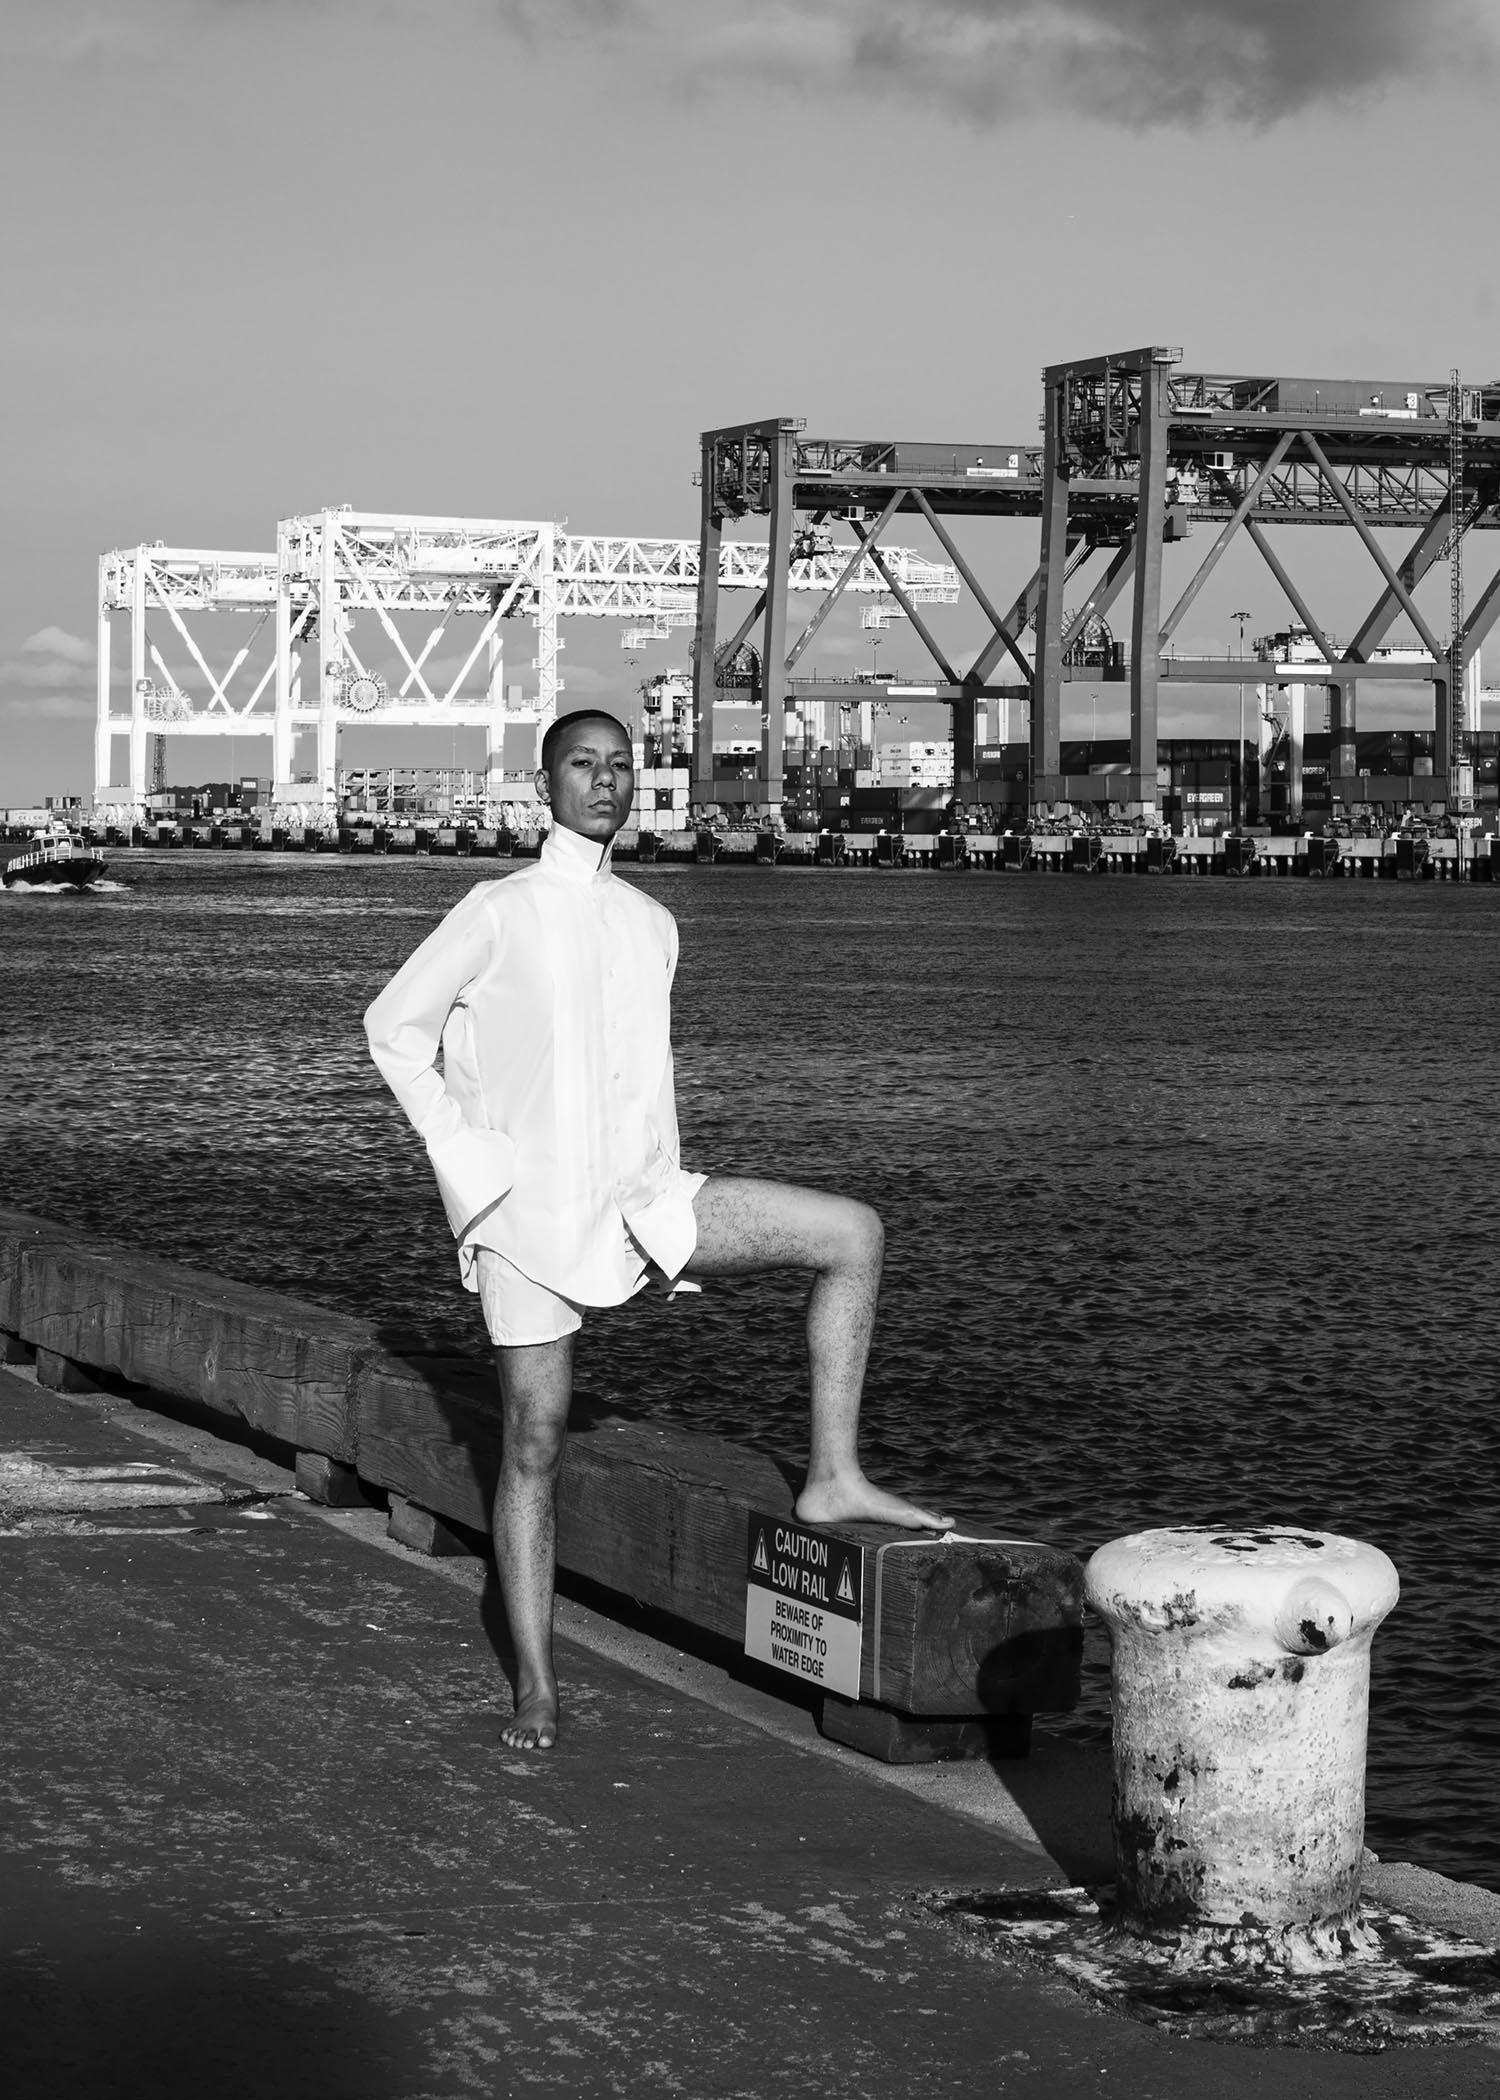 A self-portrait of CR Smith along a waterfront, wearing a white dress shirt.